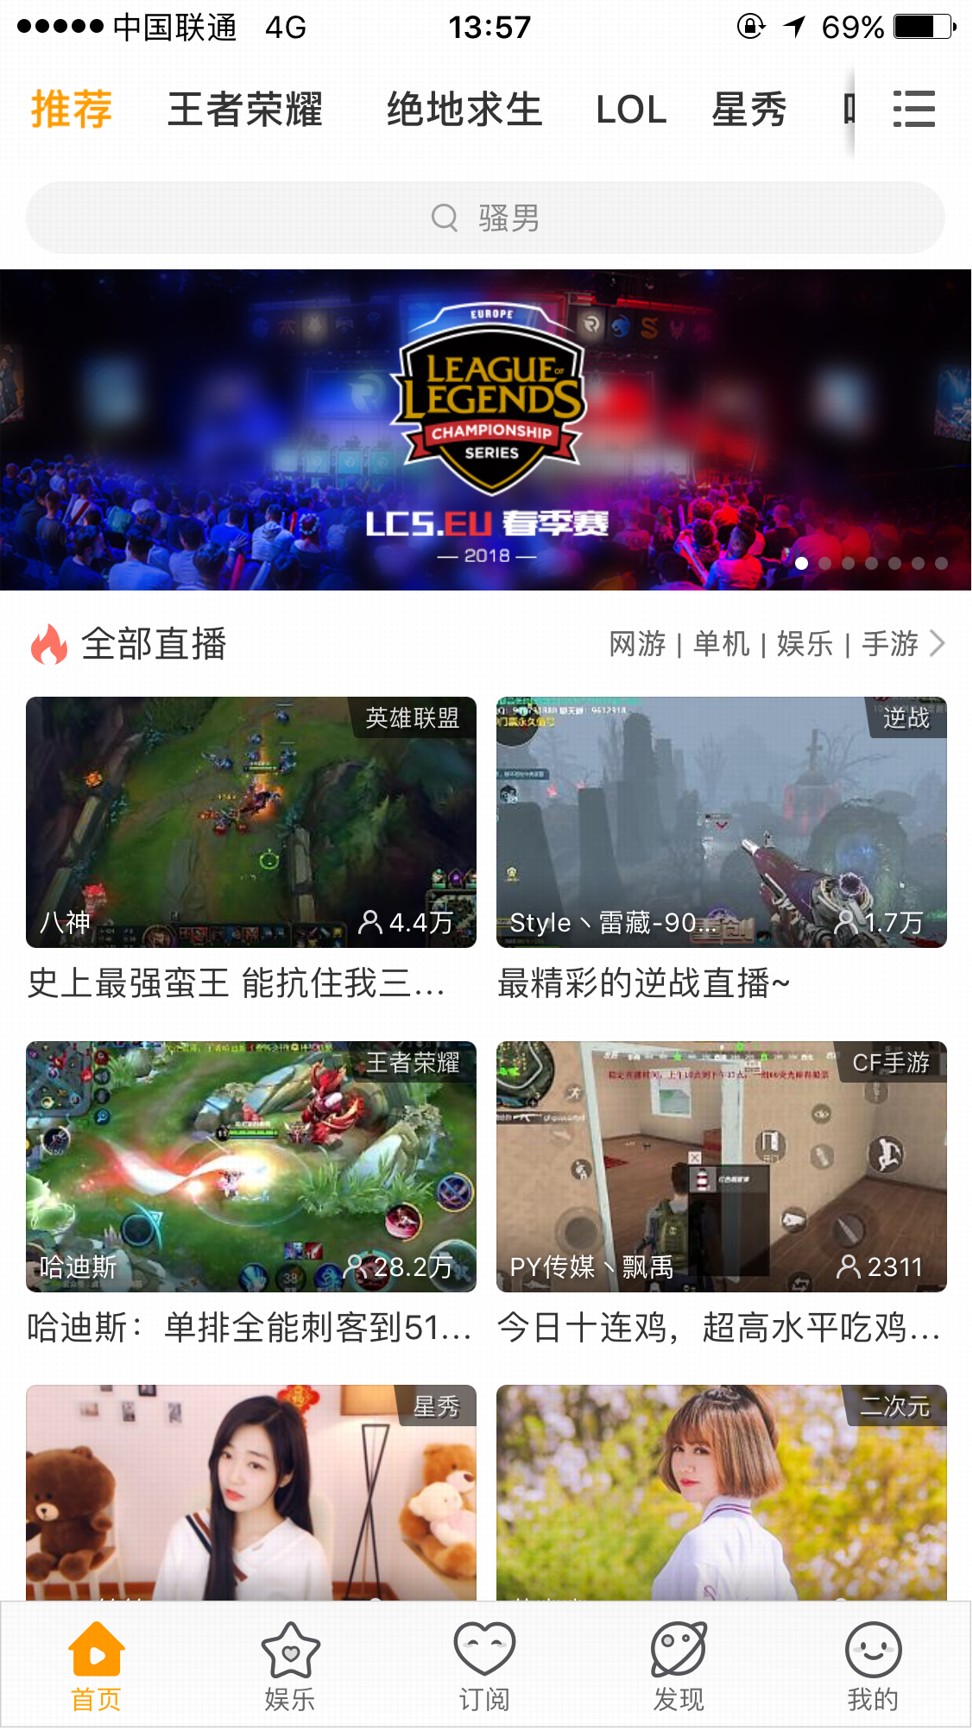 Screenshots of game live-streaming platform Huya. Photo: Handout